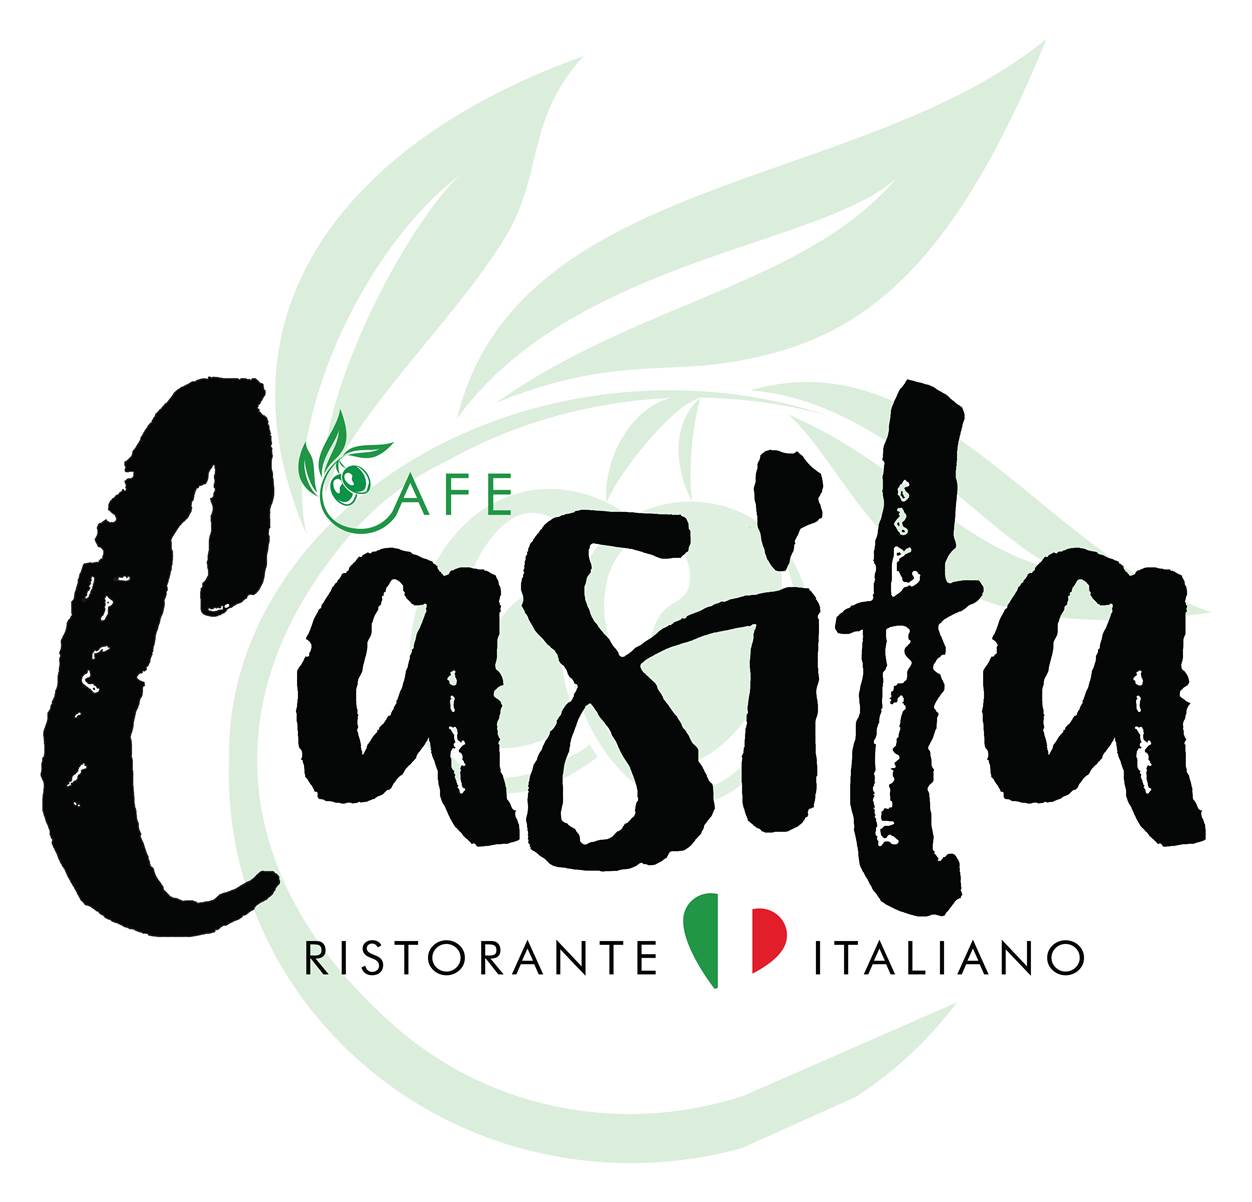 Cafe Casita Logo